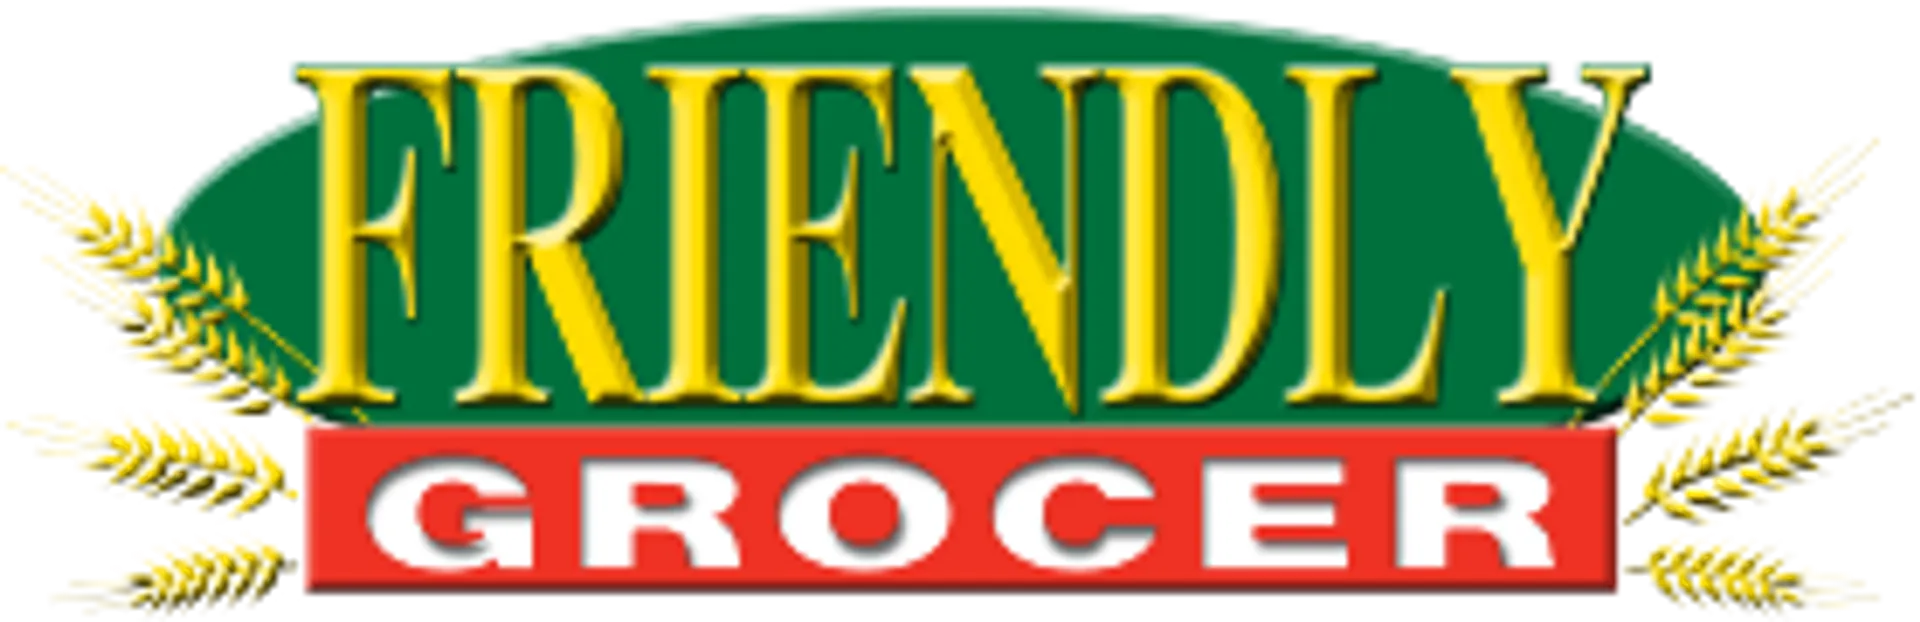 FRIENDLY GROCER logo of current flyer